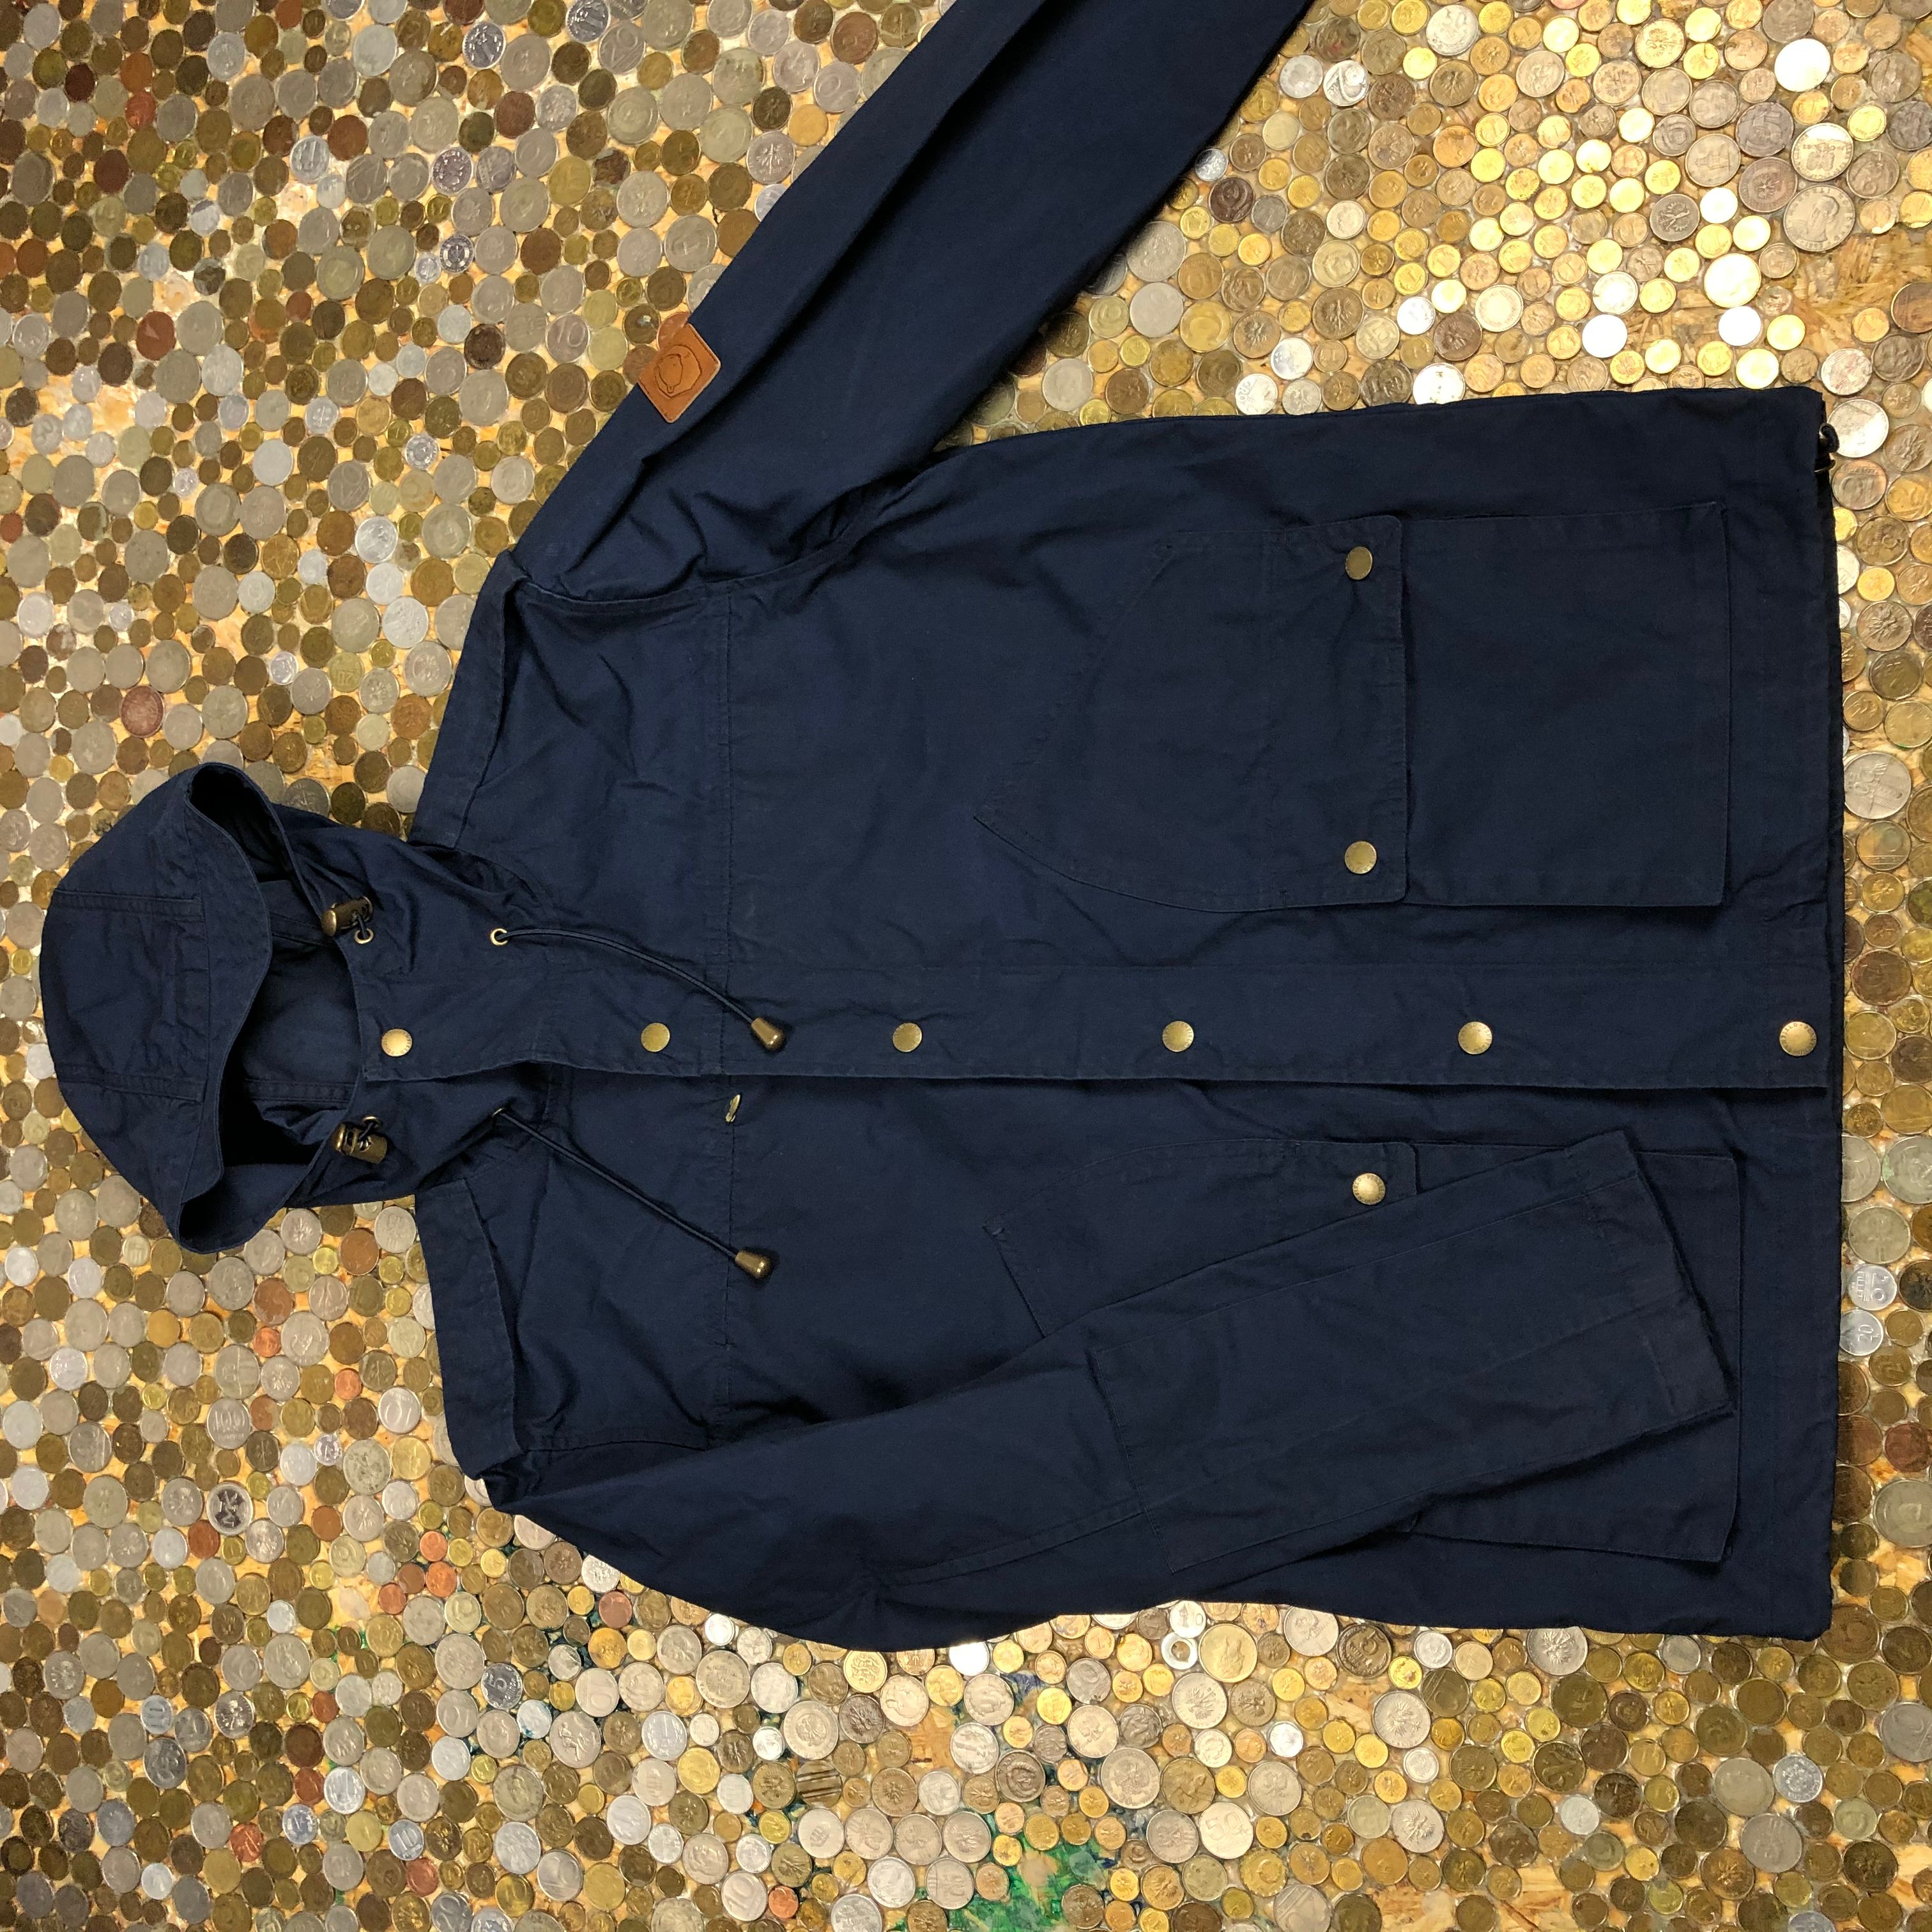 Penfield Penfield Vintage light anorak Jacket | Grailed